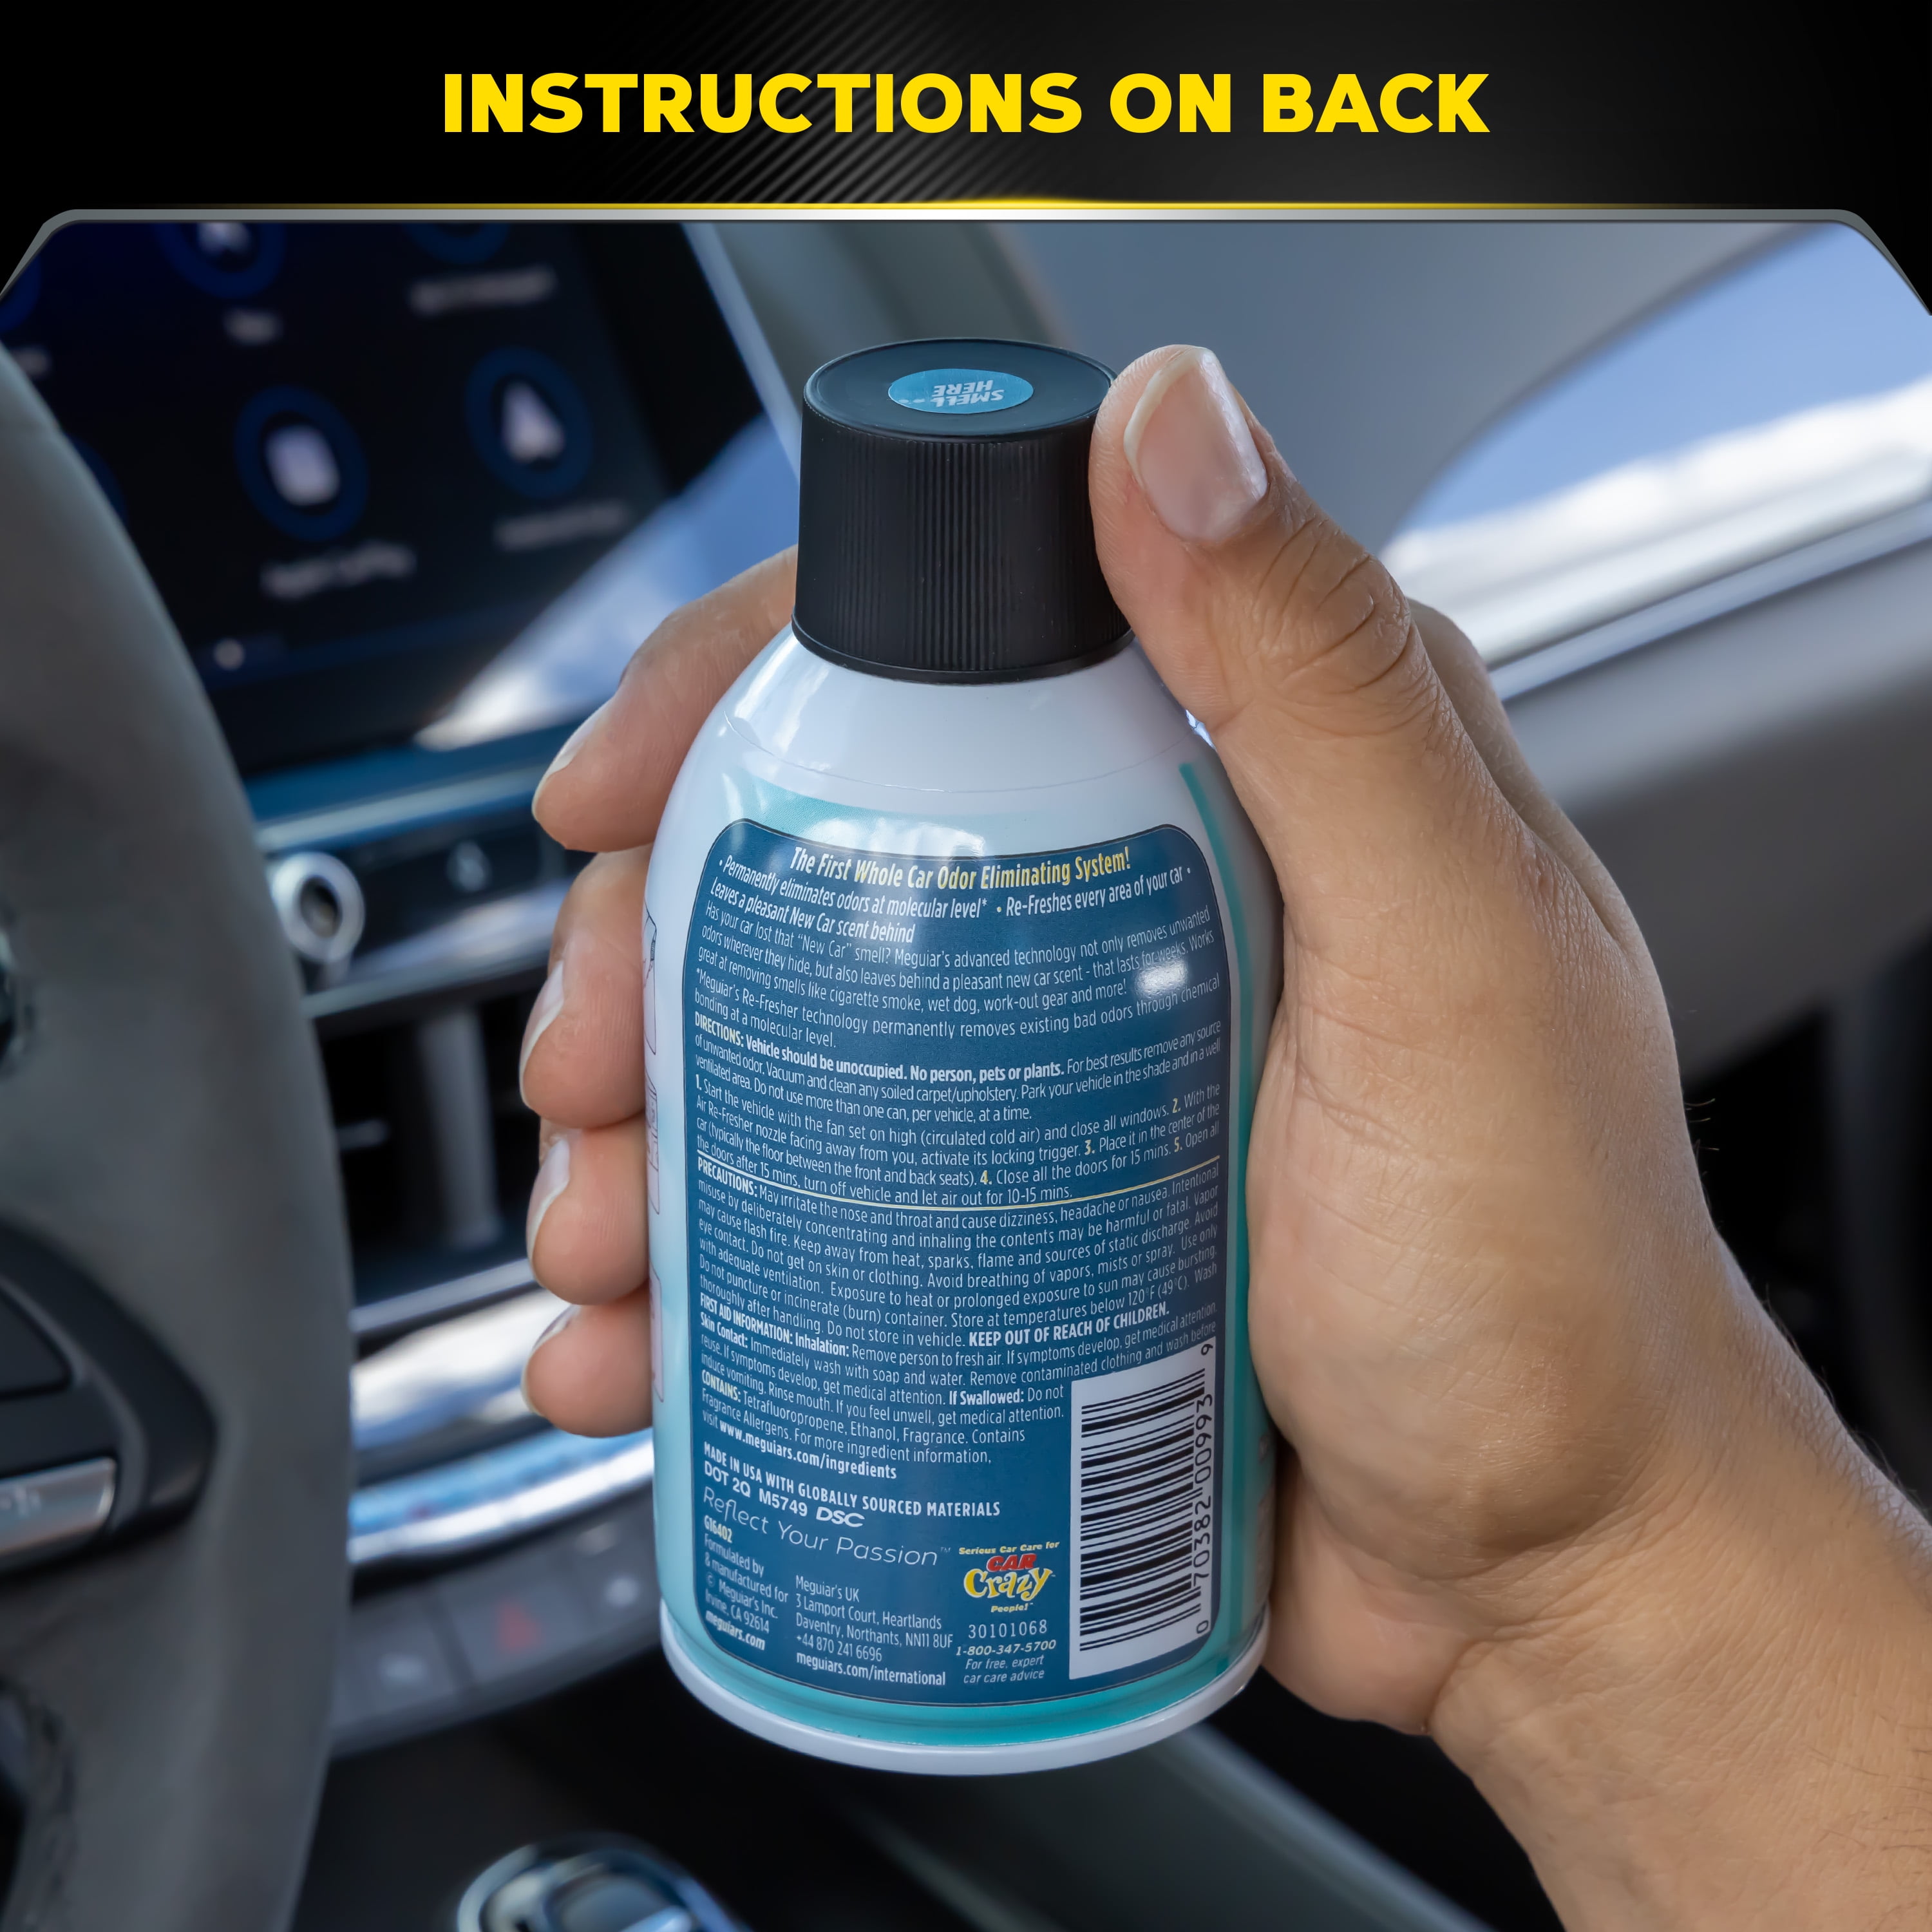 Odor remover for your car interior